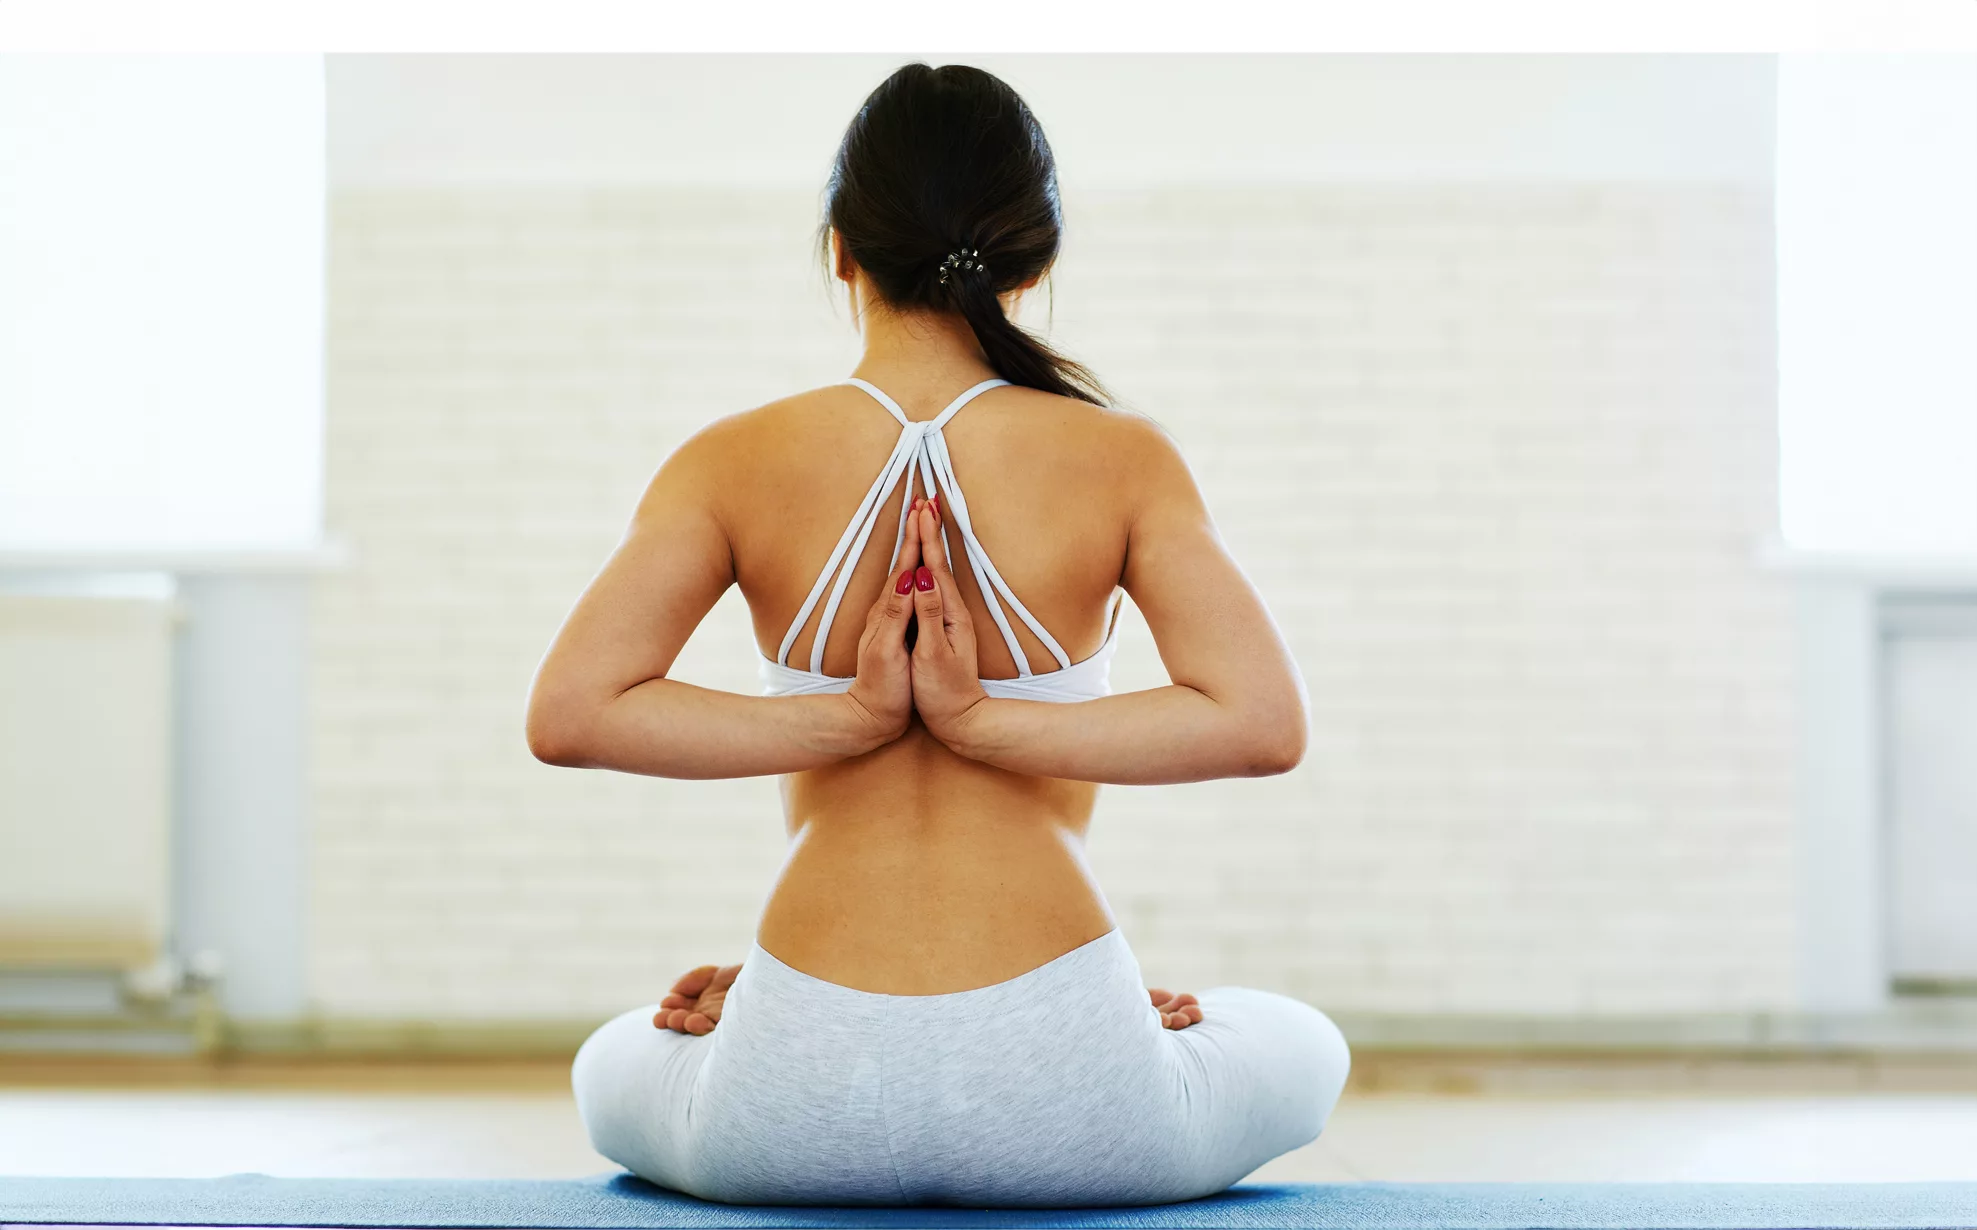 Reverse prayer yoga pose: Benefits of pashchima namaskarasana | HealthShots